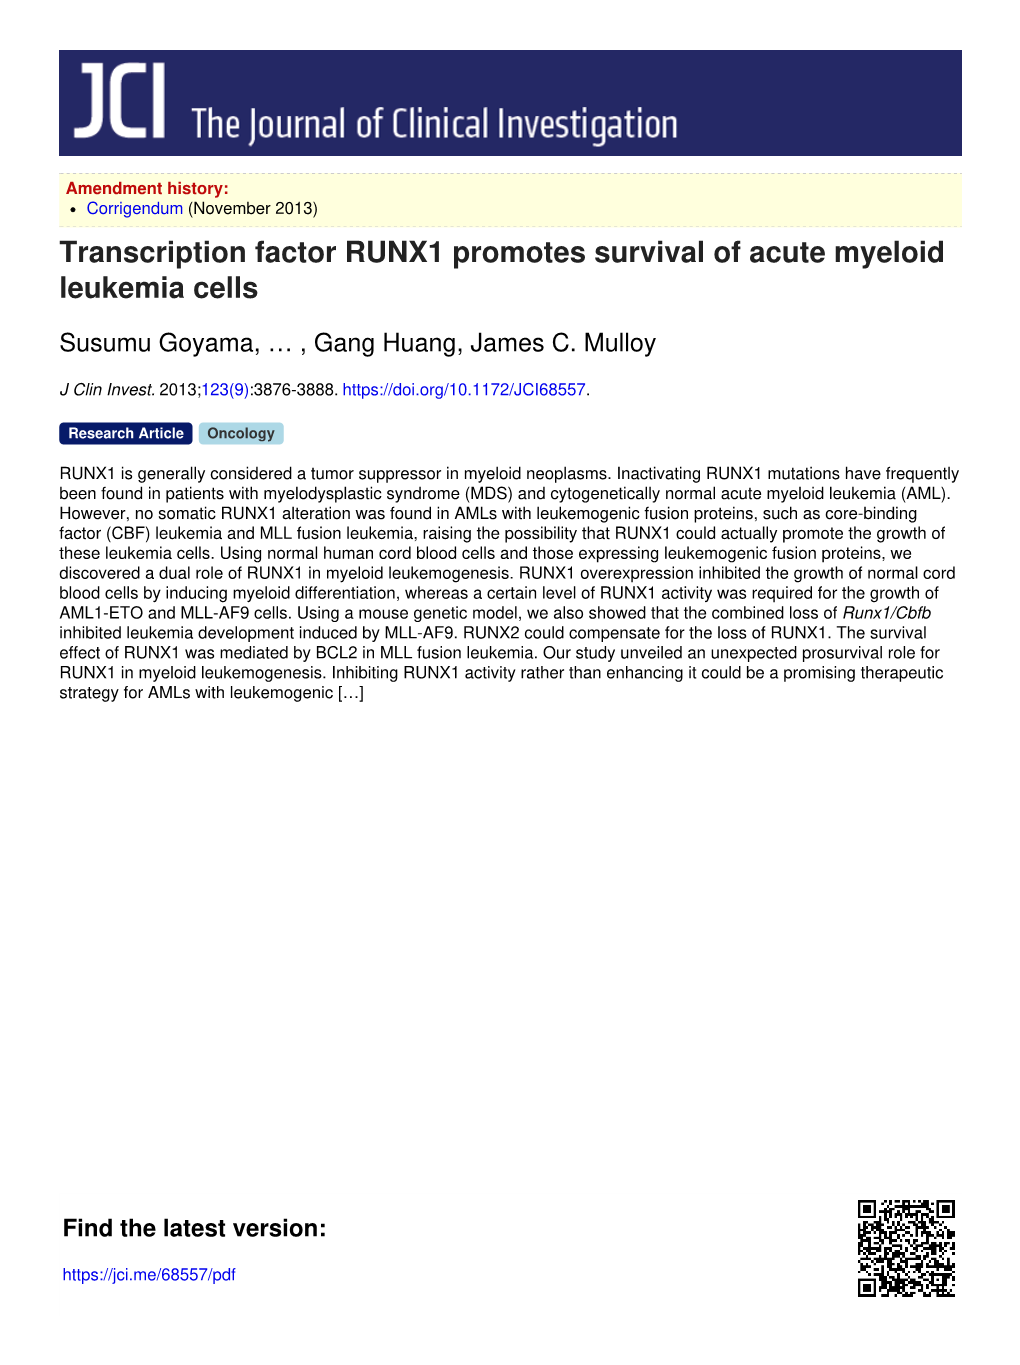 Transcription Factor RUNX1 Promotes Survival of Acute Myeloid Leukemia Cells